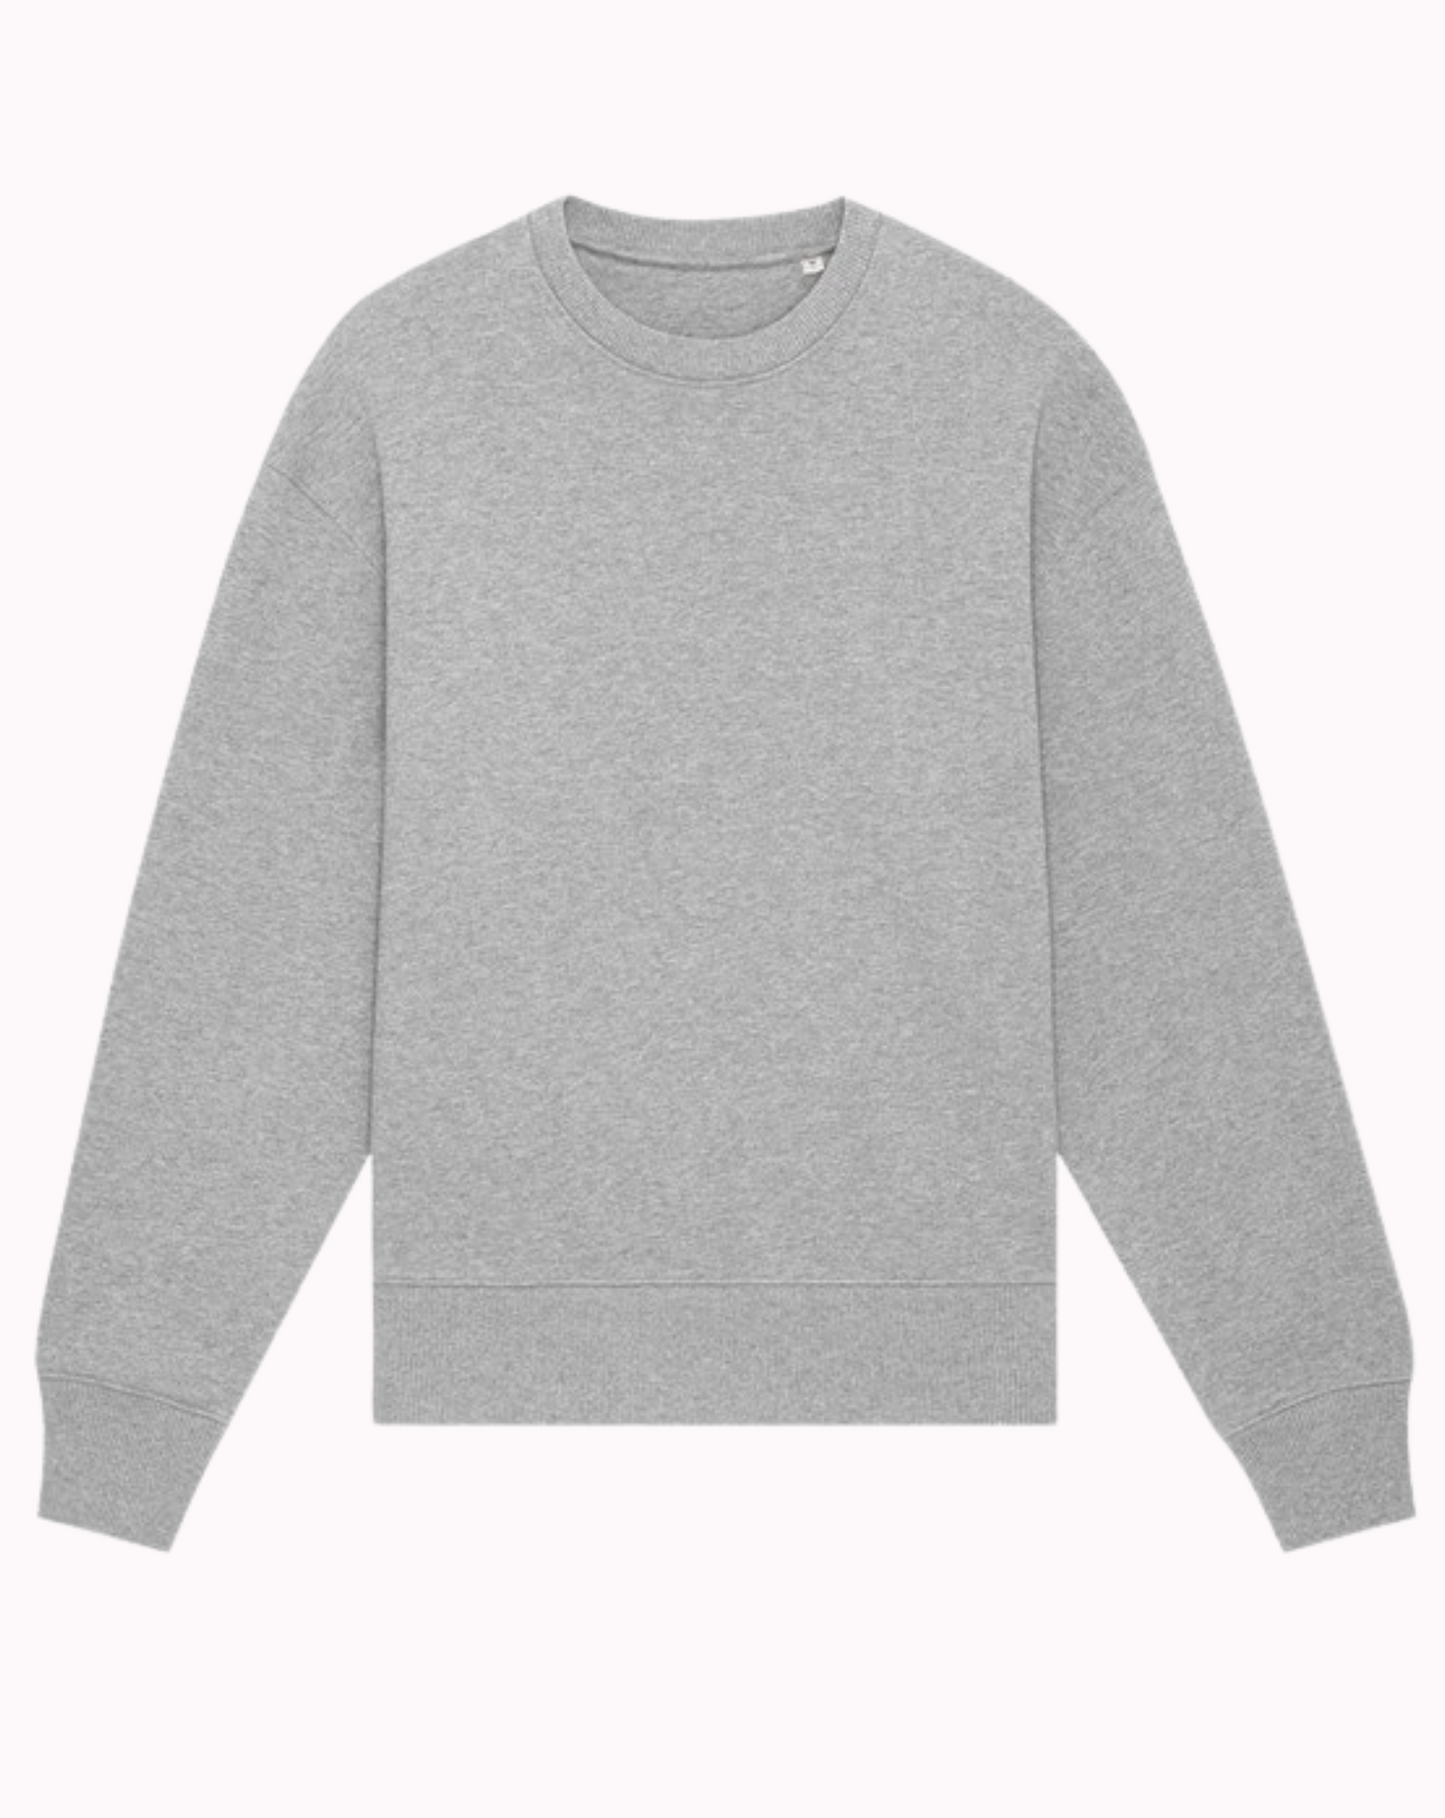 Unisex Sustainable Sweatshirt